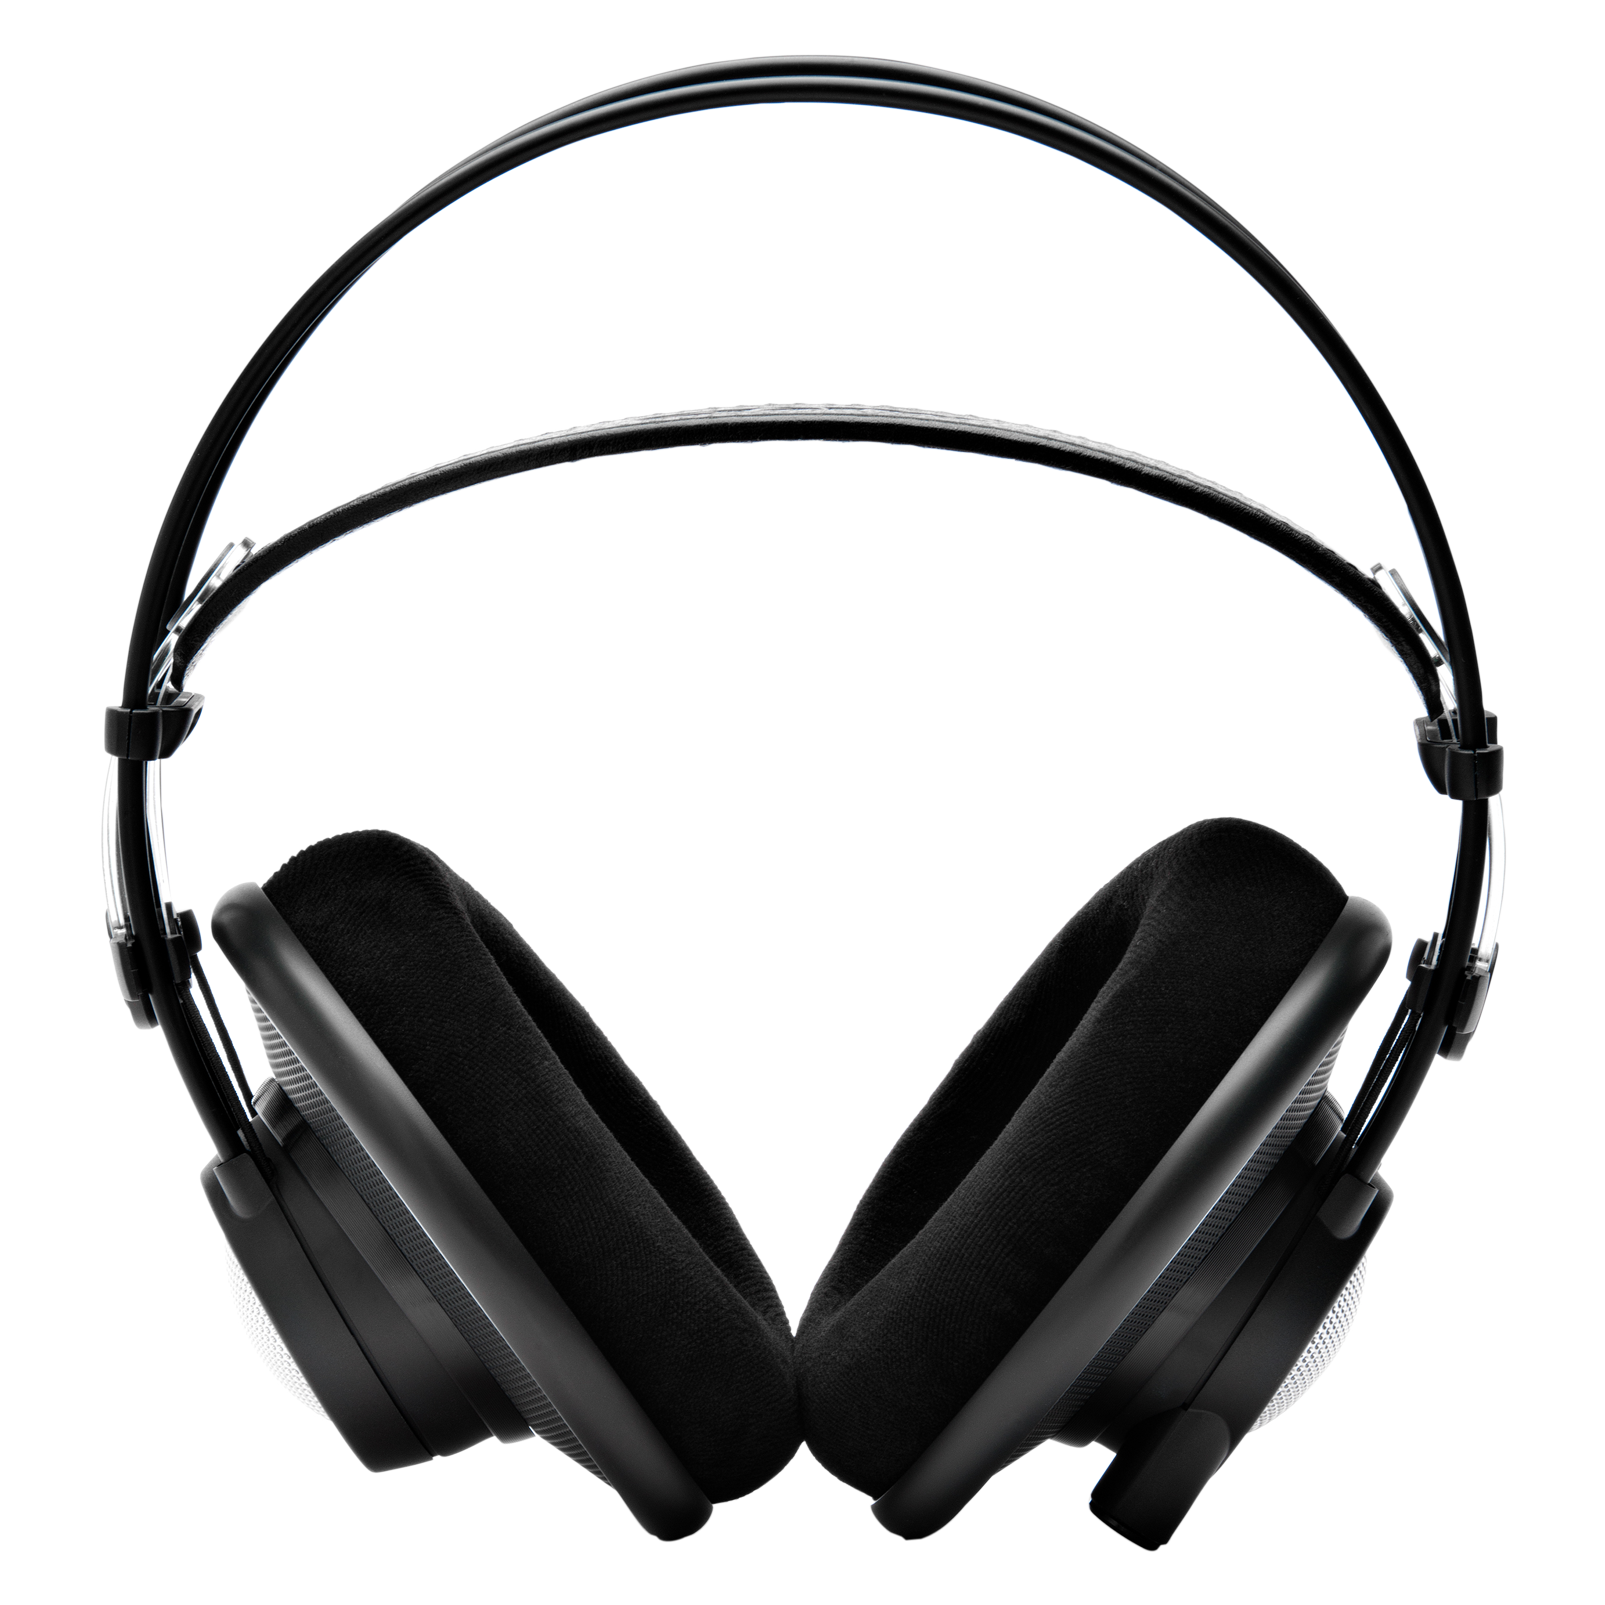 K702 | Reference studio headphones